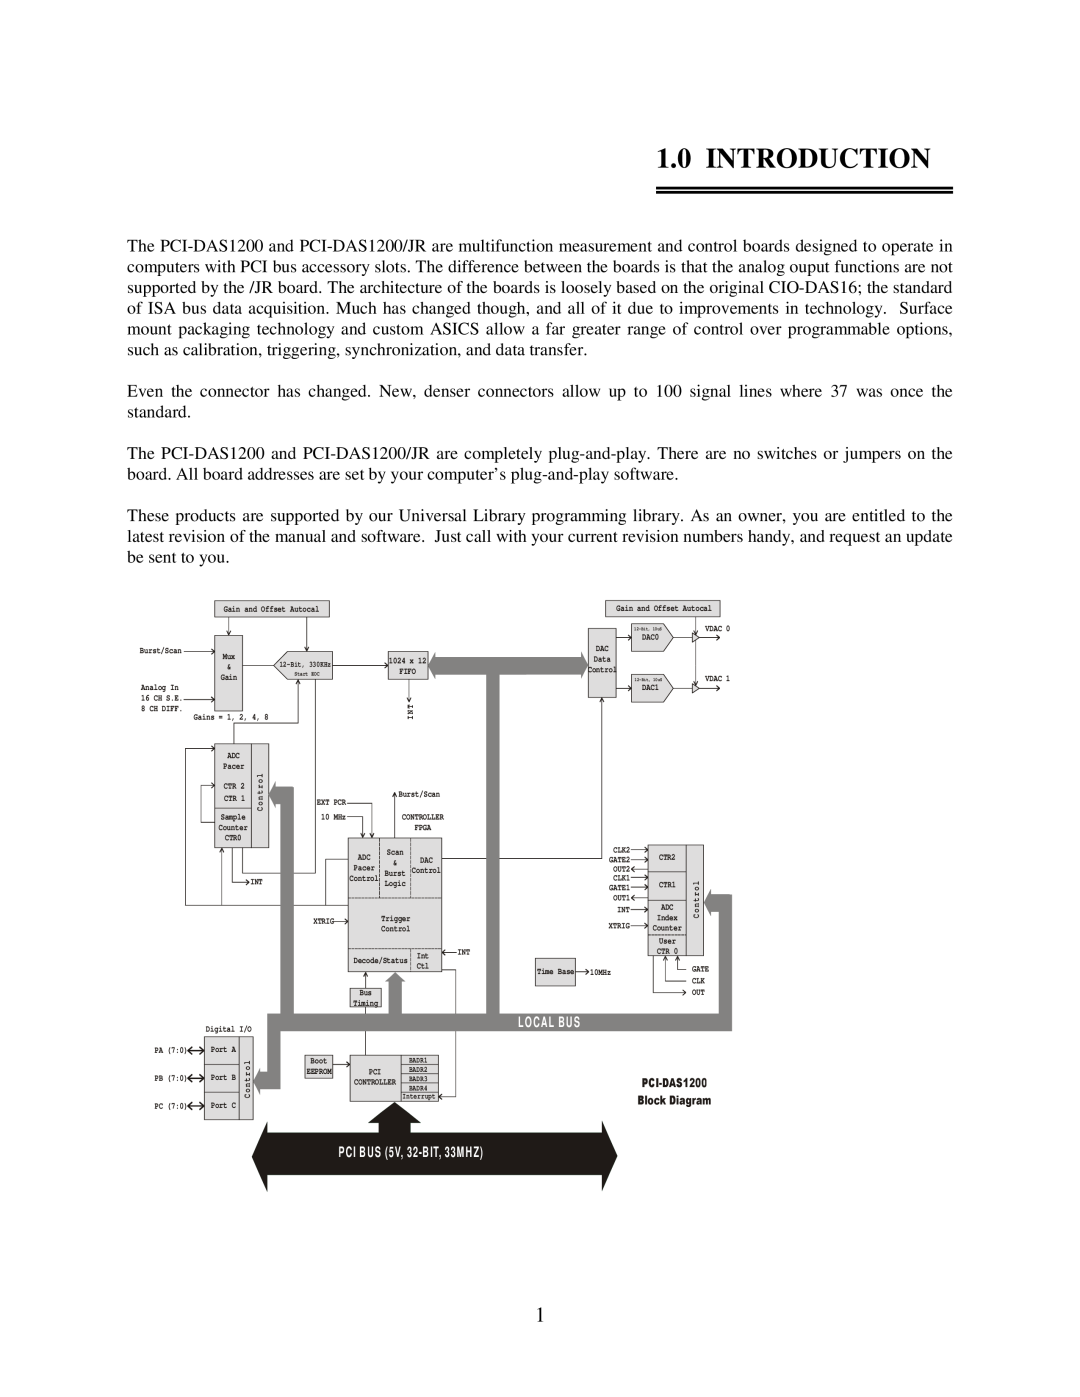 Omega Engineering PCI-DAS1200 manual Introduction, ORFN3&,$LDJUDP6 